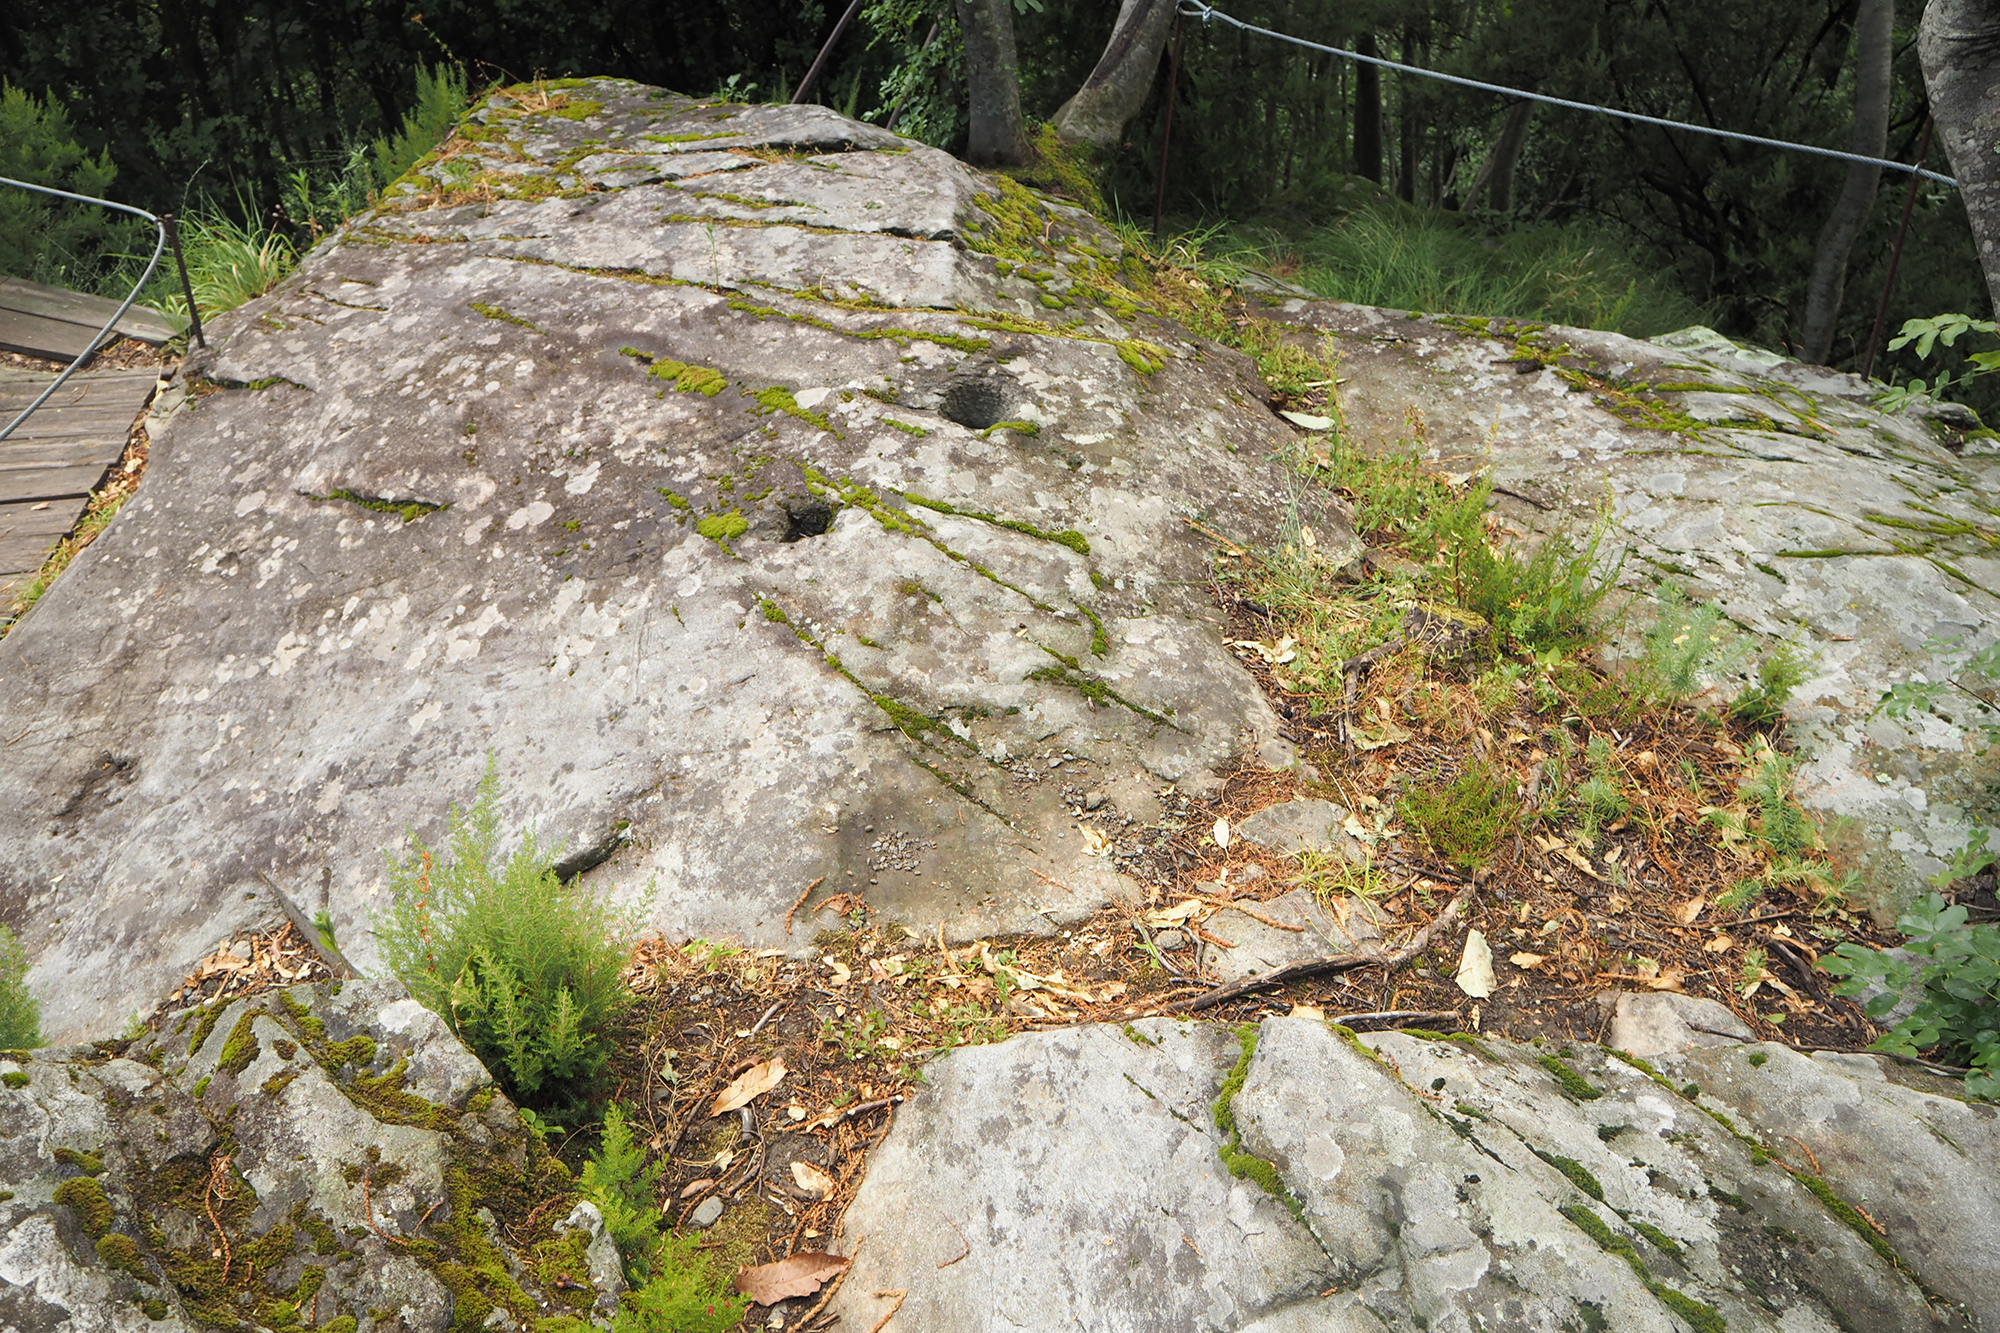 Trogna - Rock with petroglyph